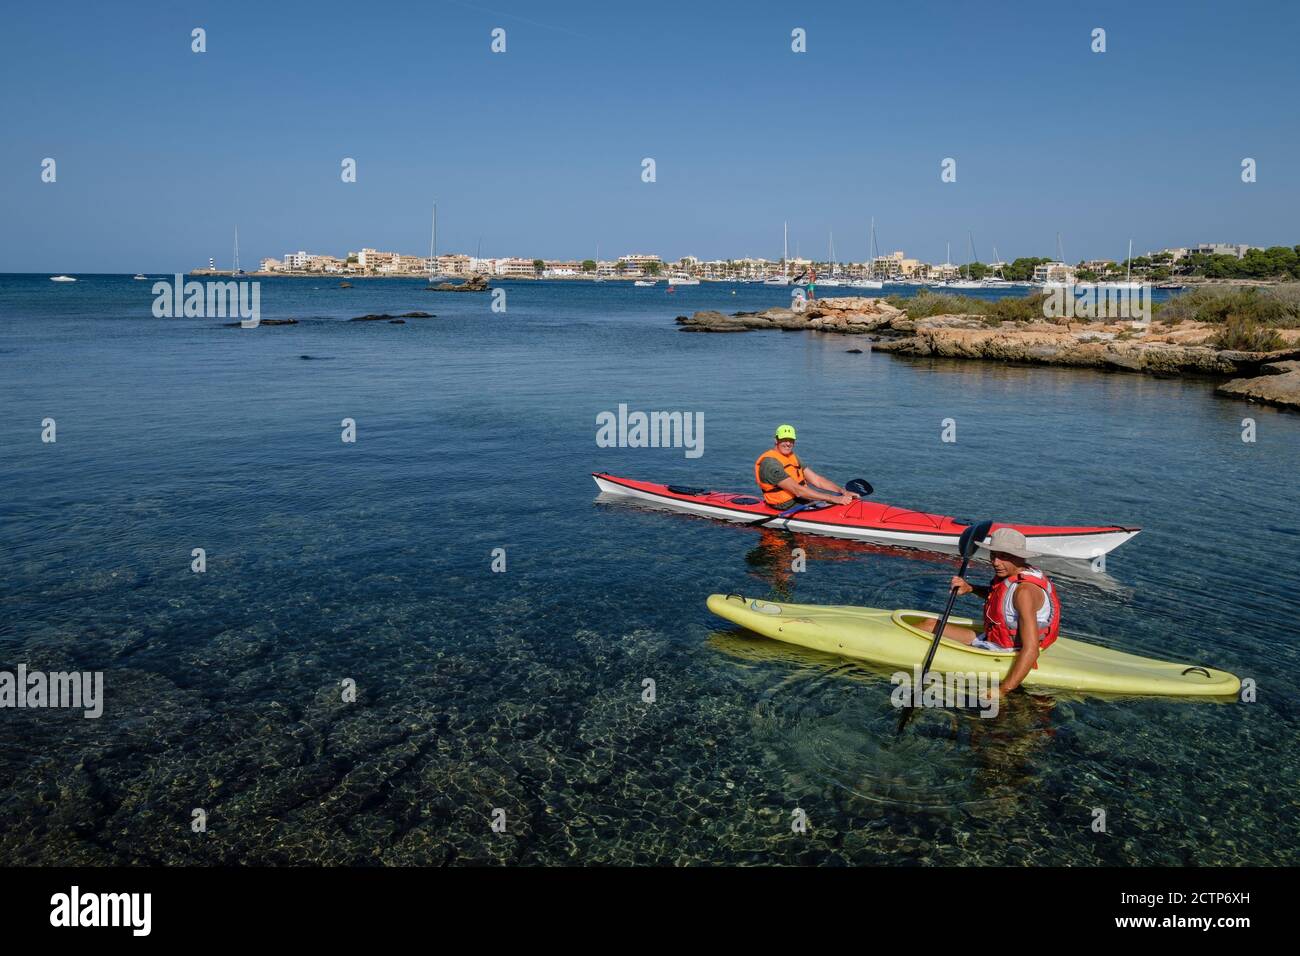 piraguistas frente a la surgencia de agua dulce, es Dolç, Colònia de Sant Jordi, término de Ses Salines , Mallorca, balearic islands, Spain Stock Photo